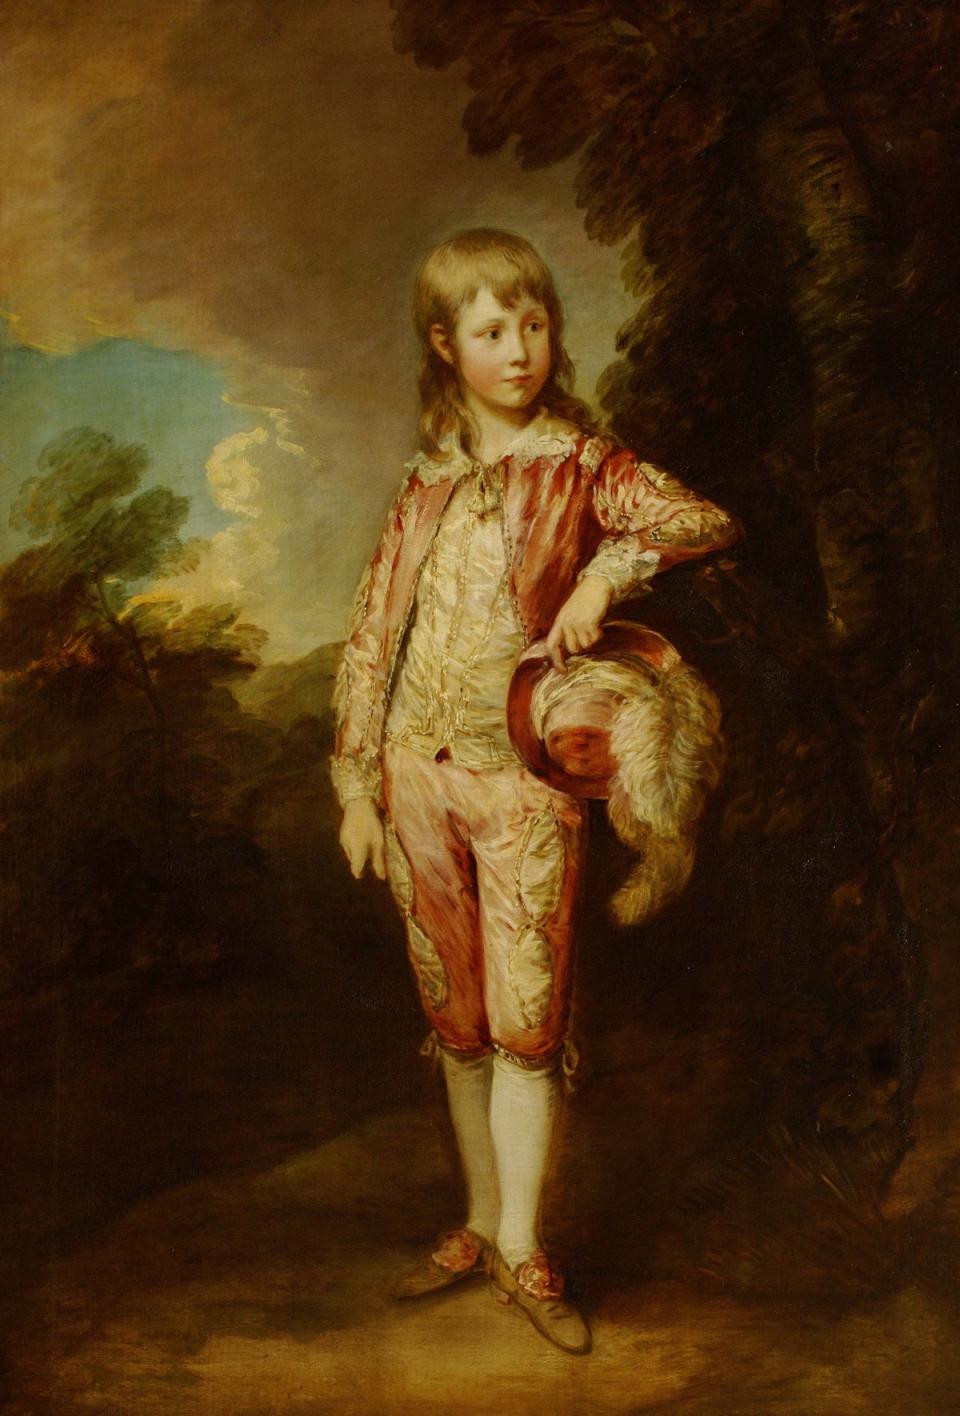 Thomas Gainsborough’s ‘The Pink Boy’ from 1782 (Waddesdon Image Library/The Public Catalogue Foundation, Art UK)